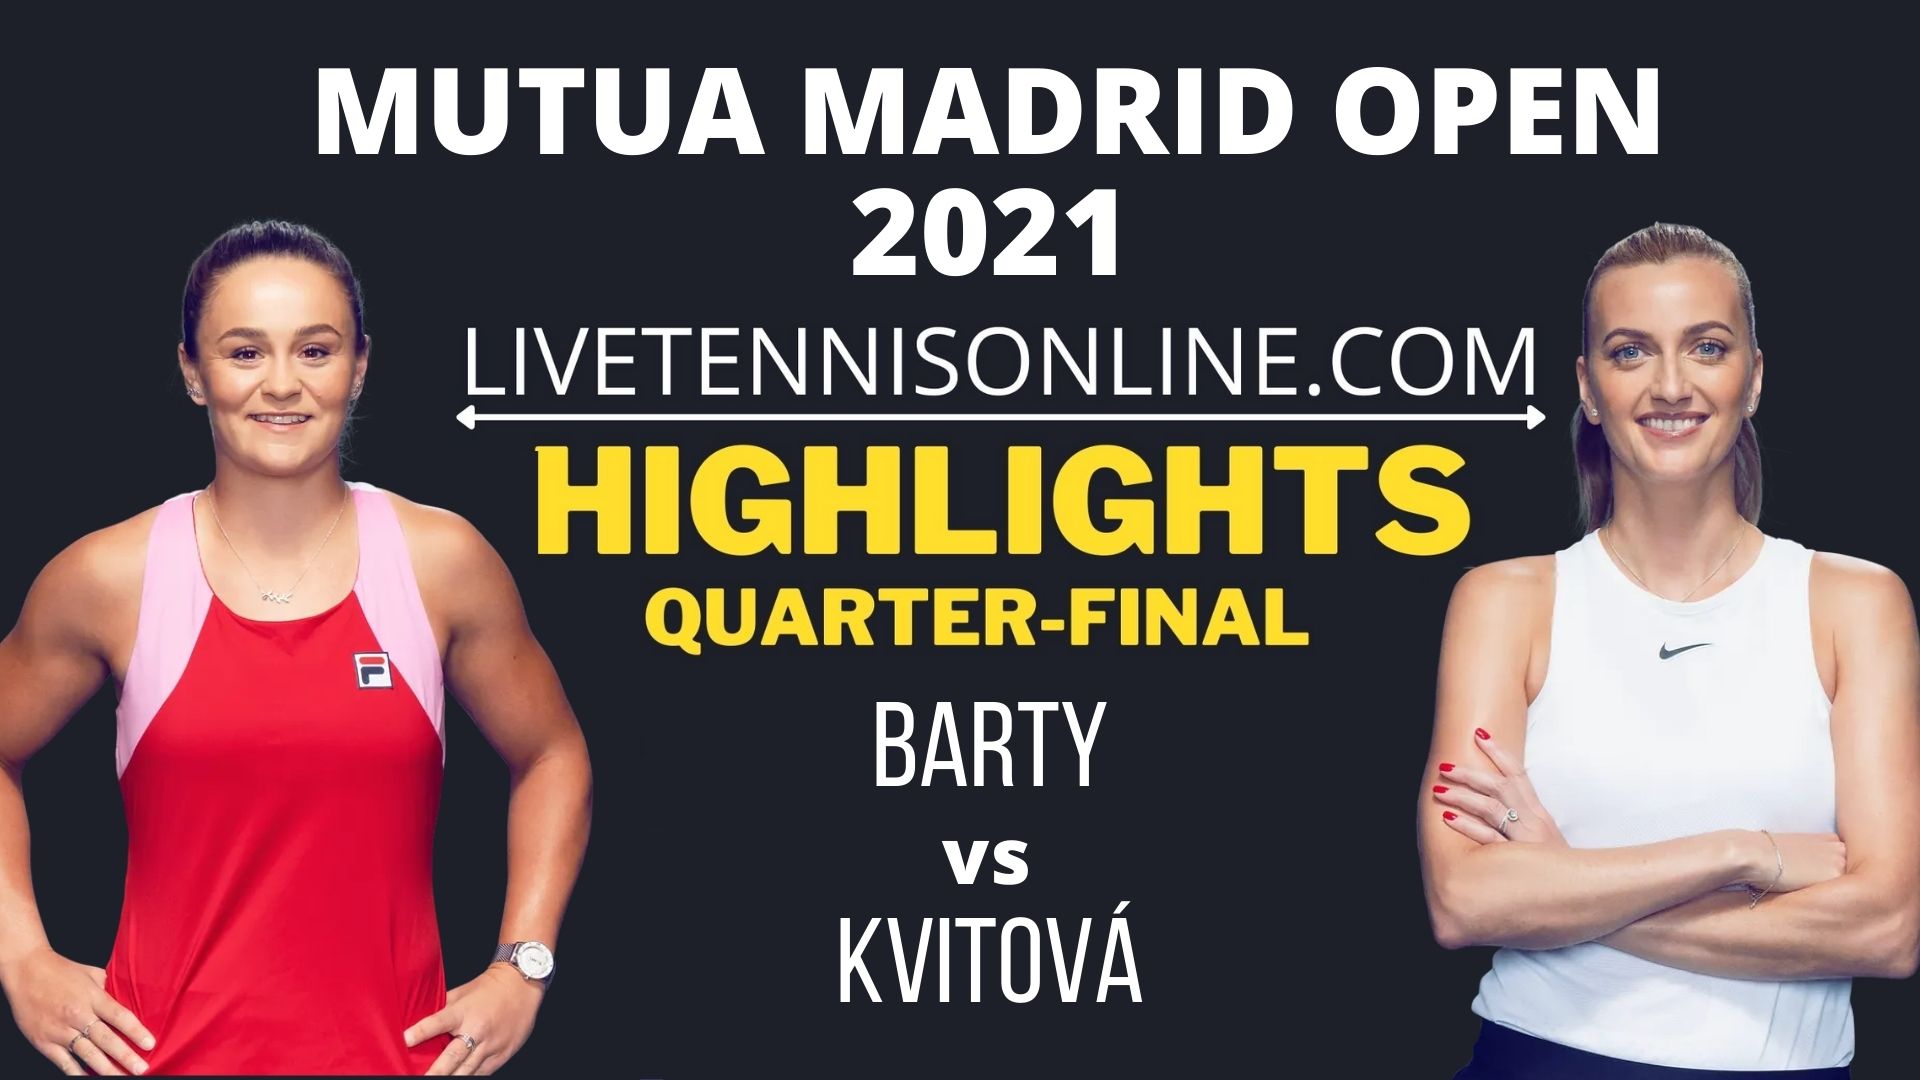 Barty Vs Kvitova Quarter Final Highlights 2021 Madrid Open